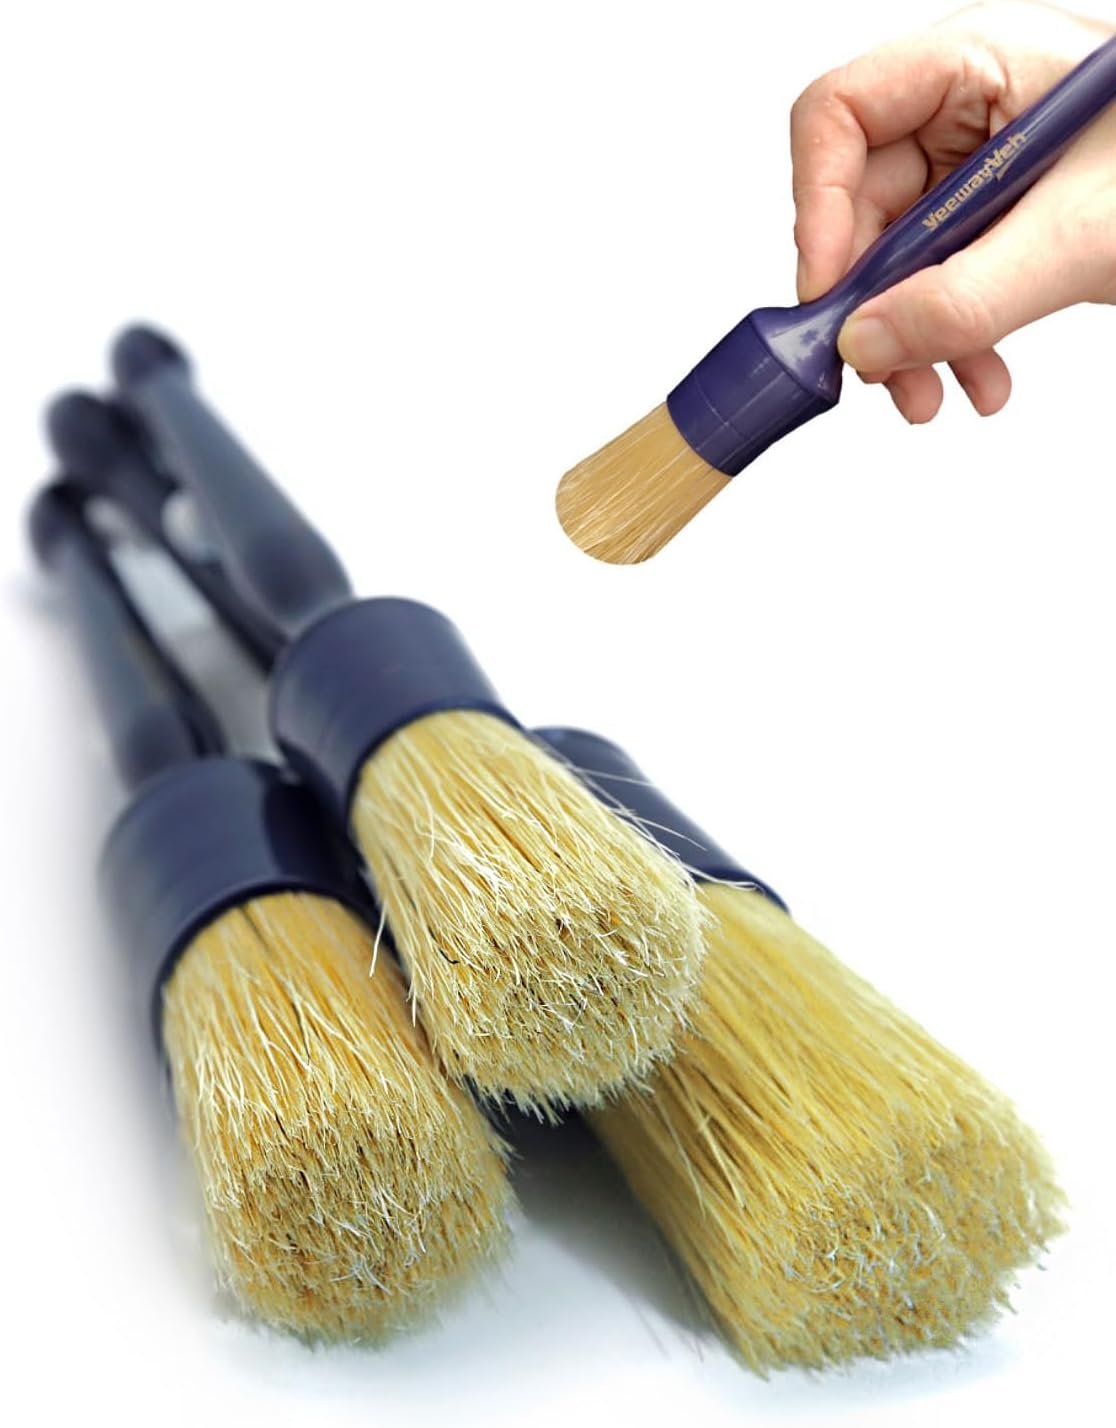 Boars Hair Detailing Brush Set Review